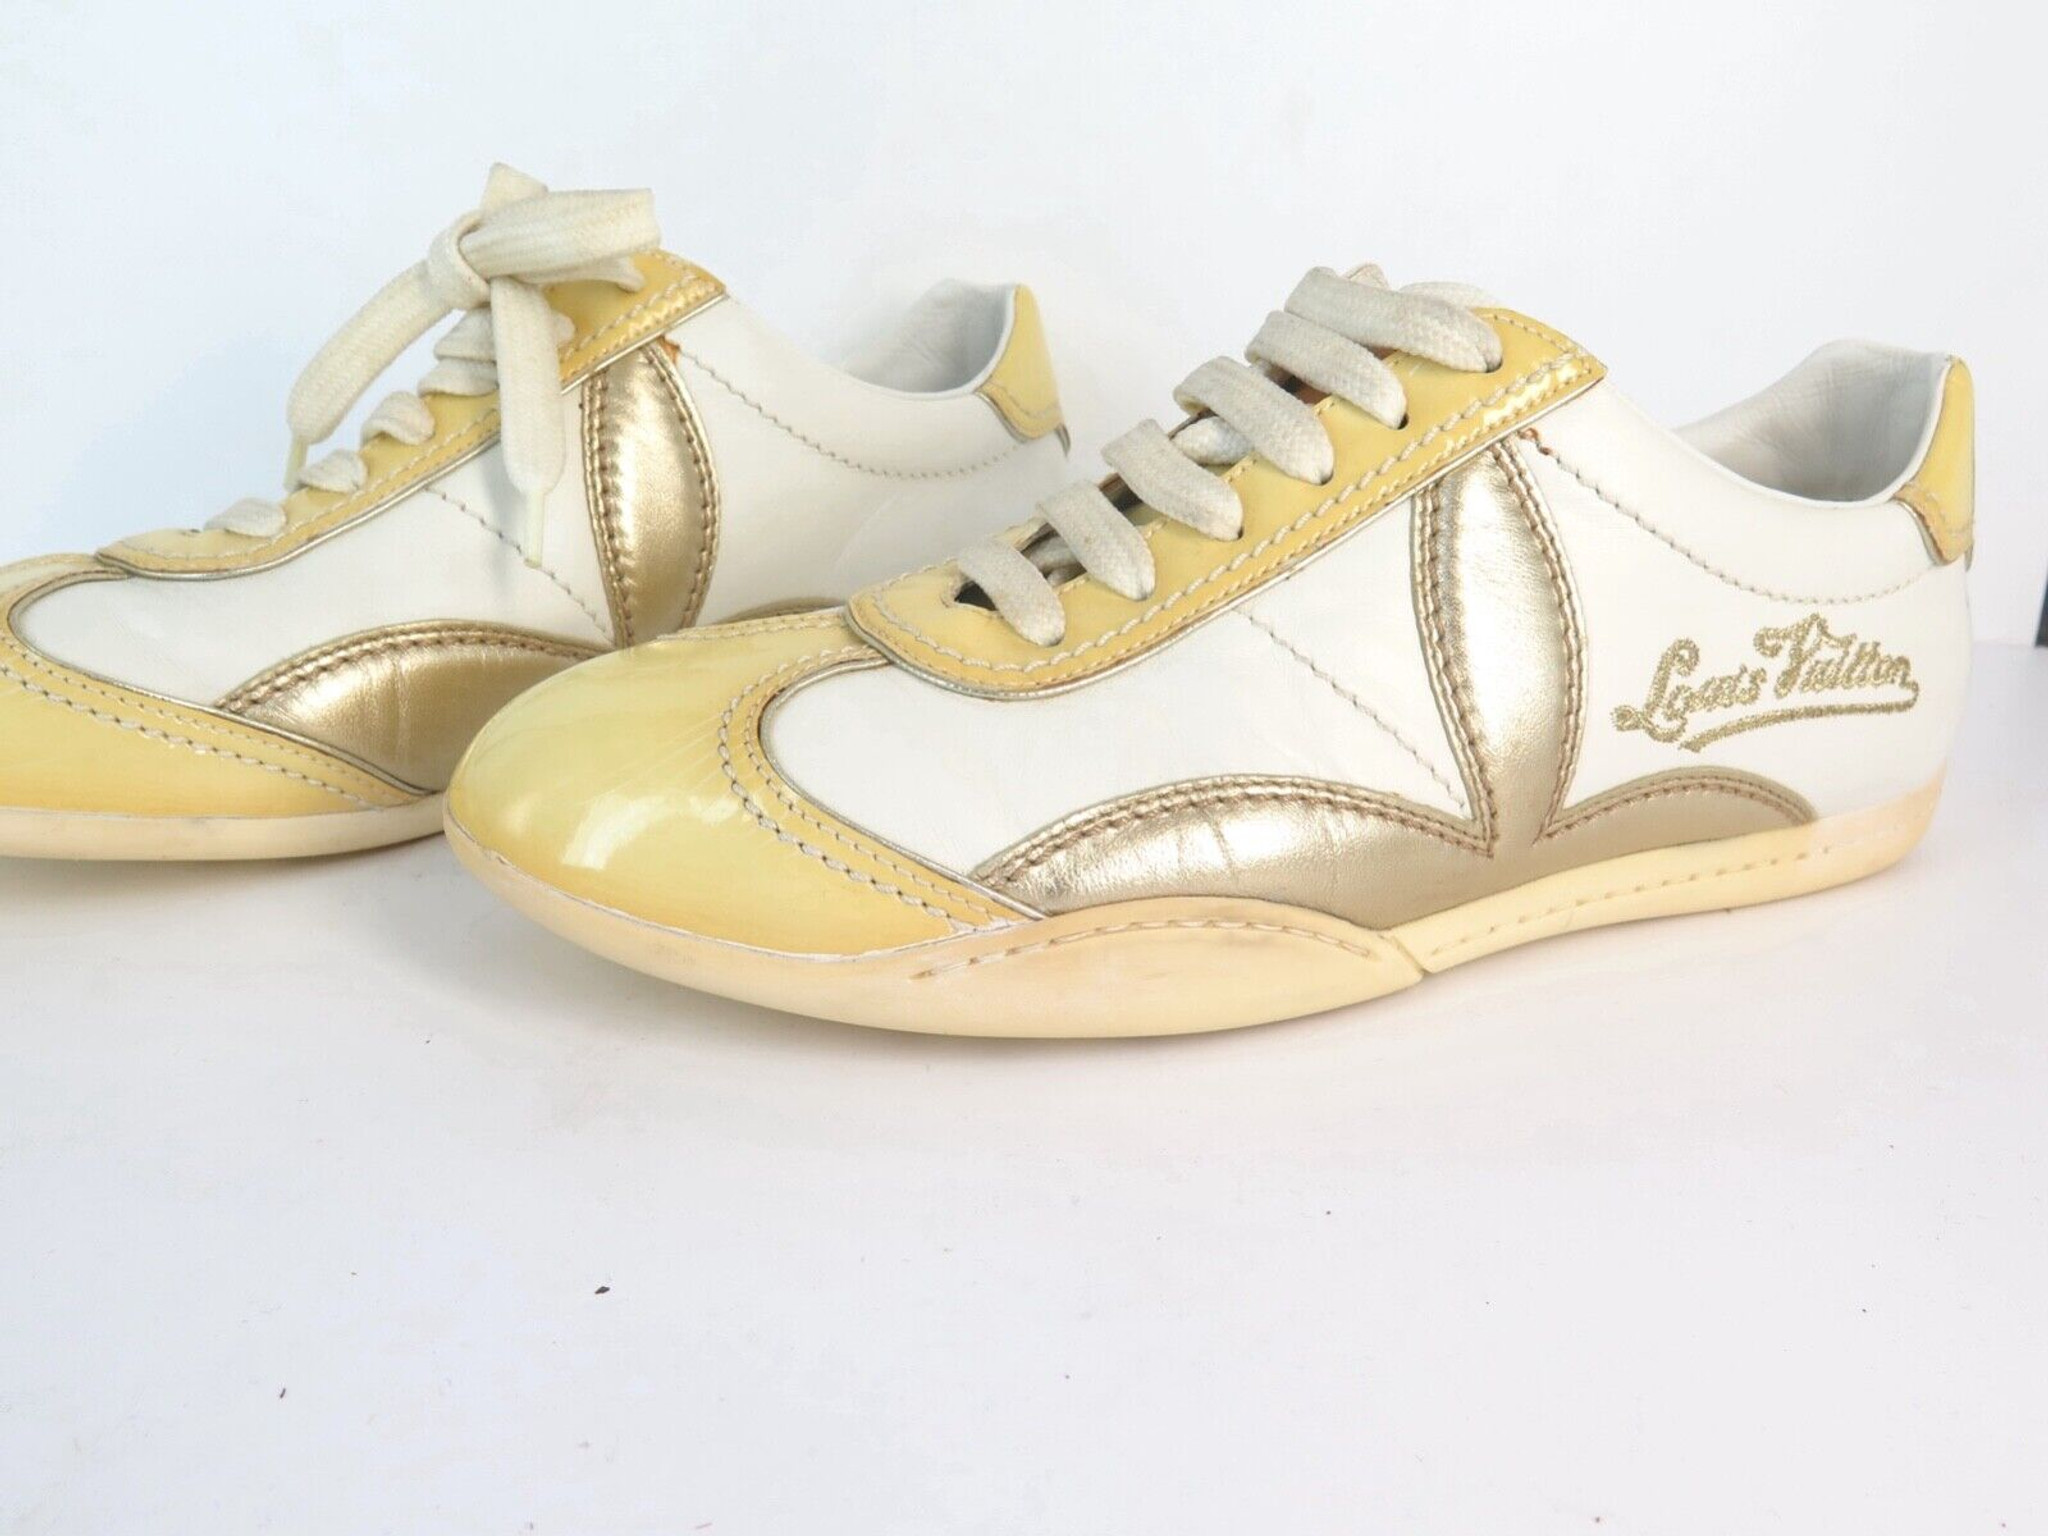 Patent Leather Louis Vuitton Sneakers, size 36.5. - Harrington & Co.